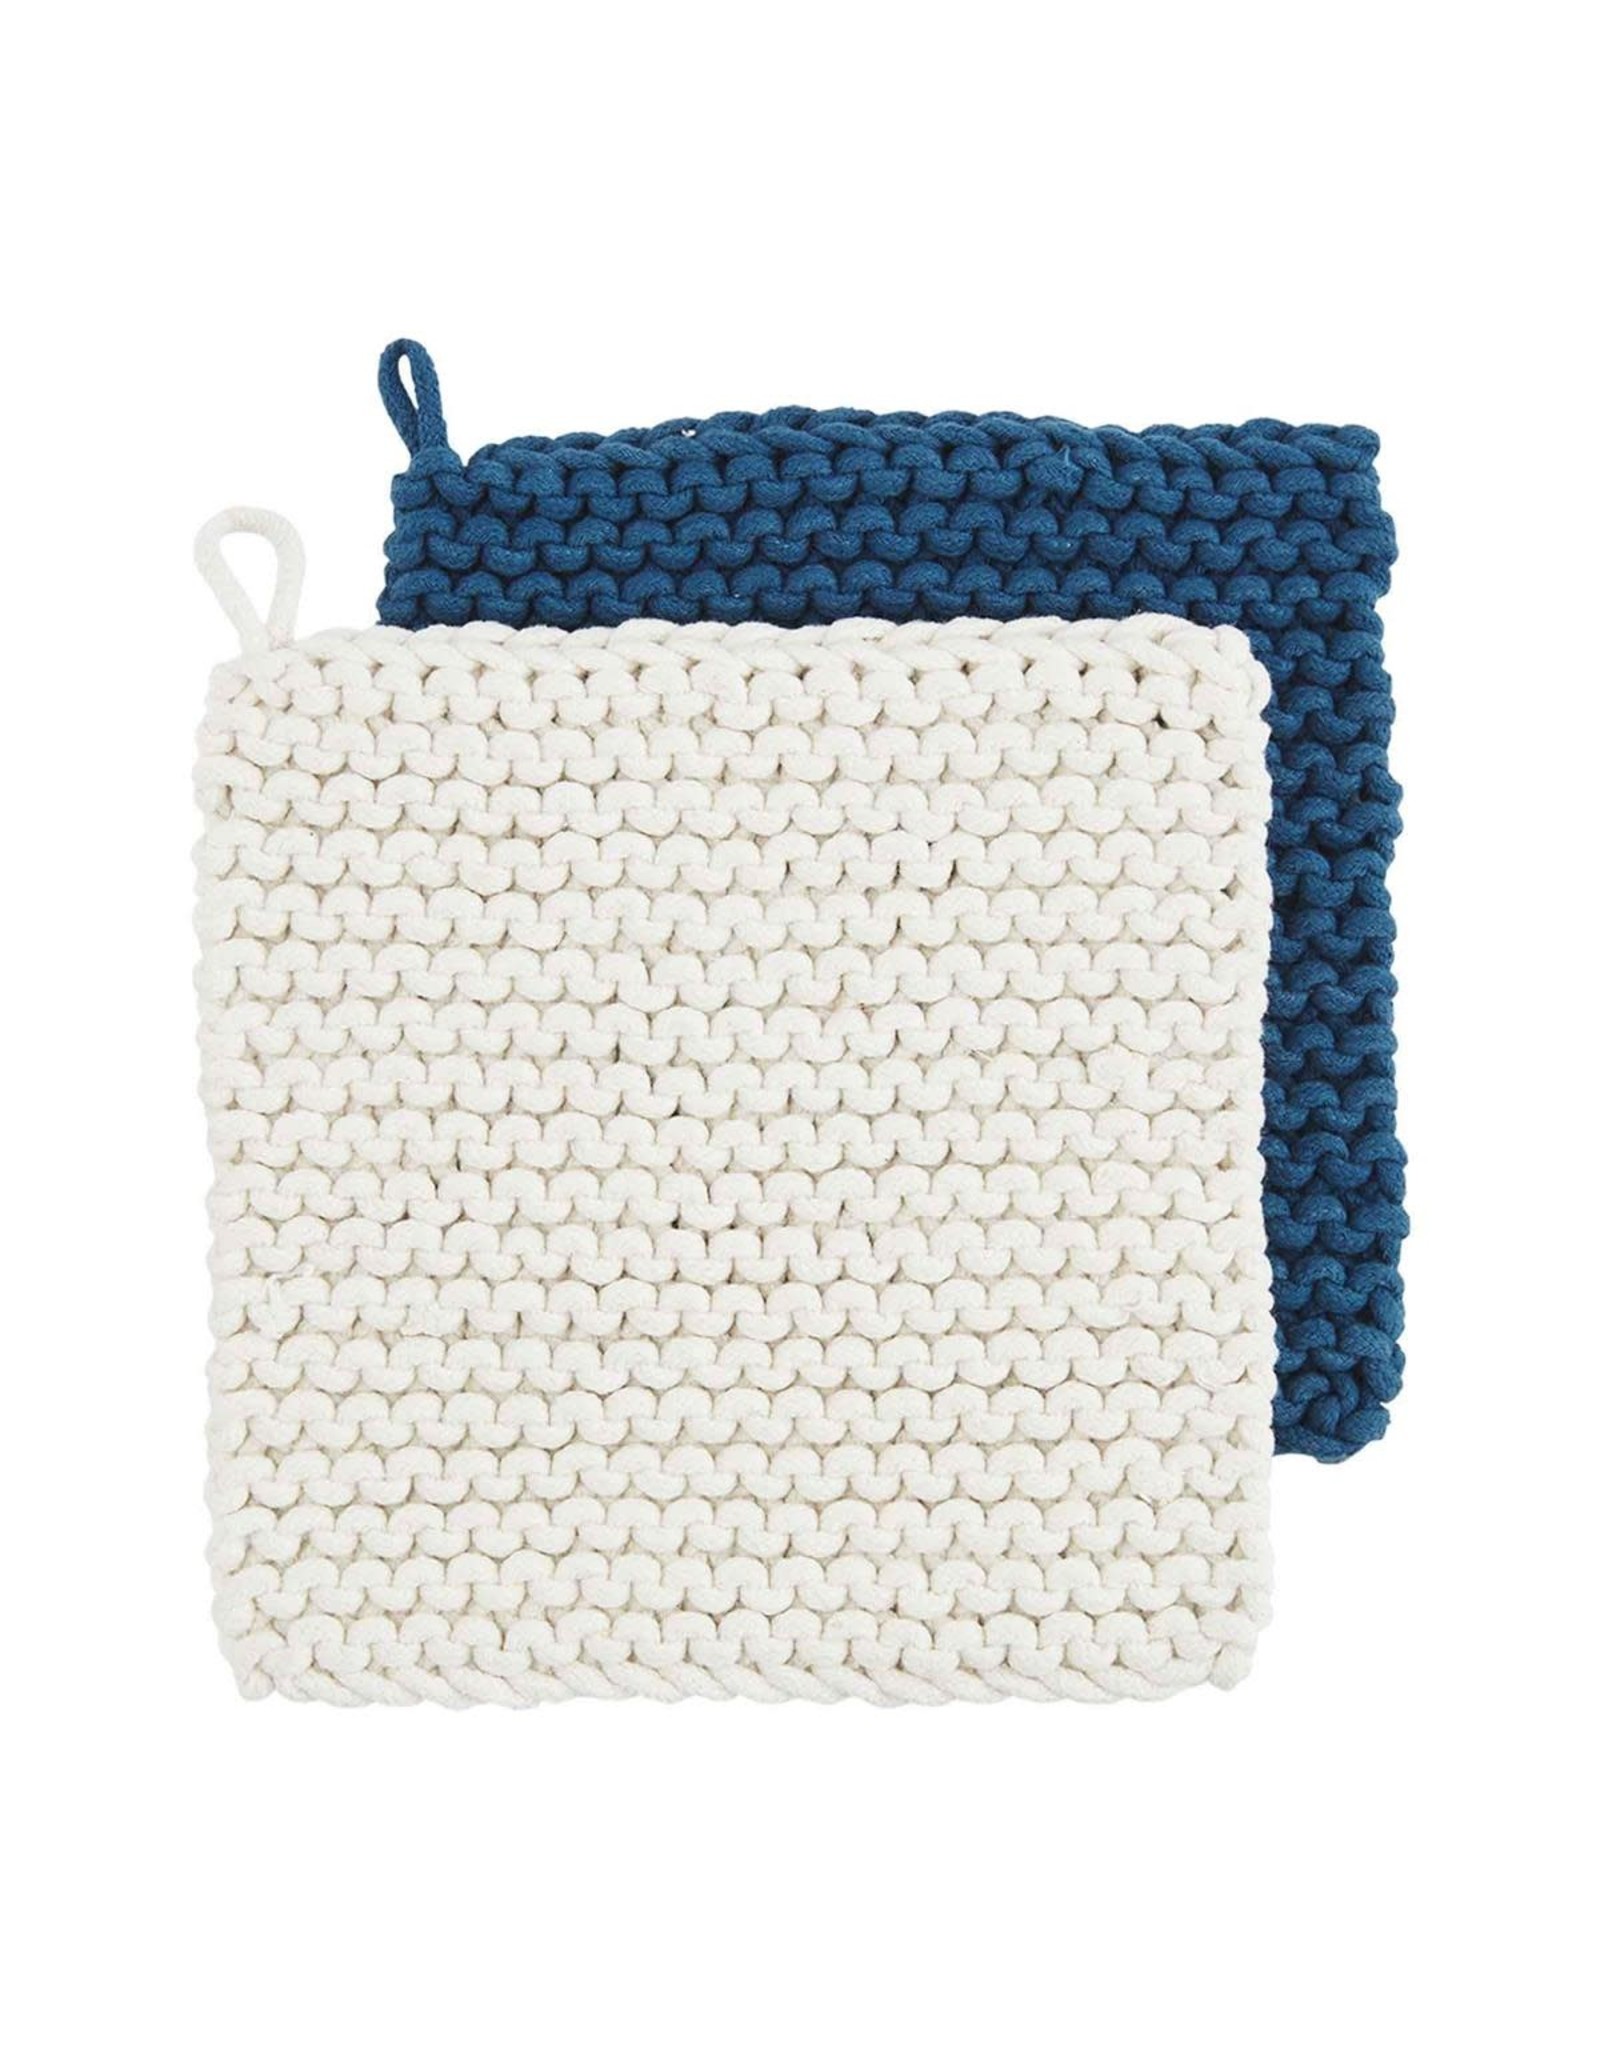 https://cdn.shoplightspeed.com/shops/633980/files/54203469/1600x2048x2/mud-pie-crochet-pot-holders-set-of-2-white-blue.jpg